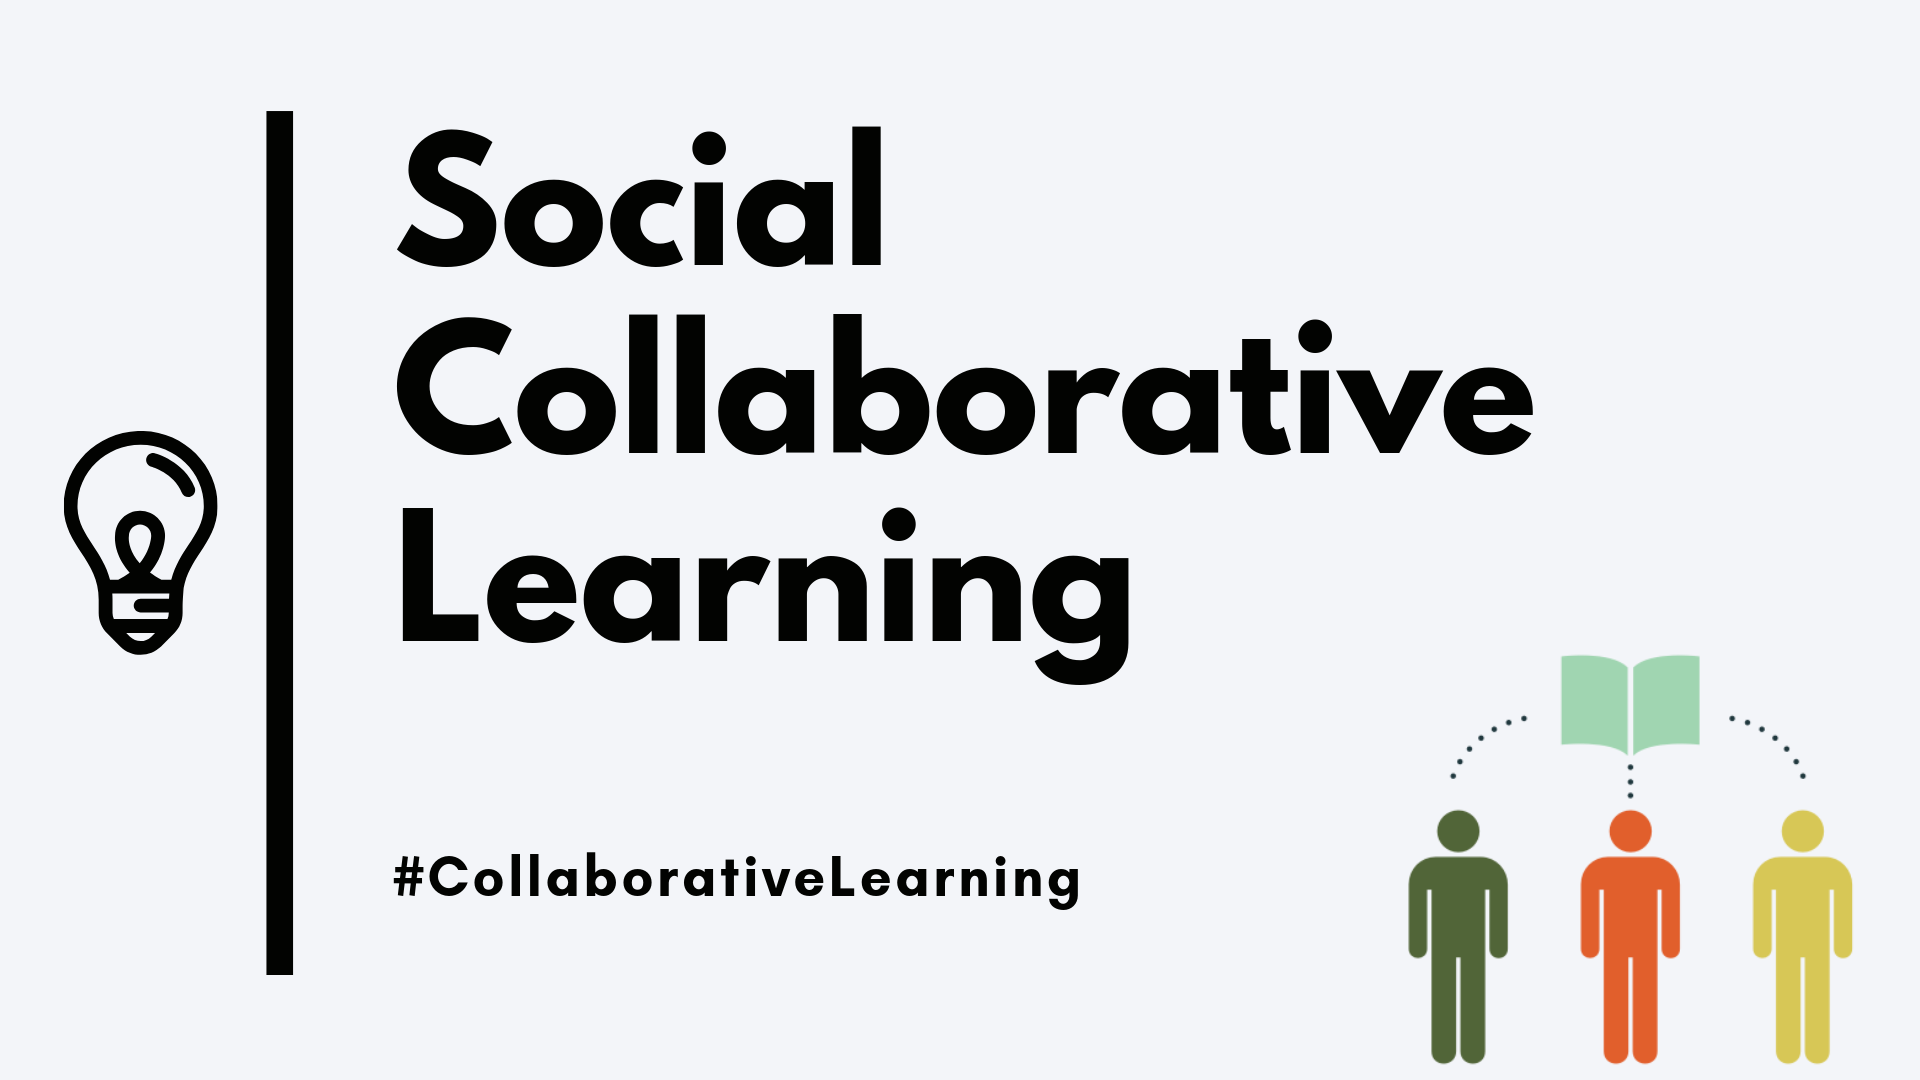 Social Collaborative Learning platform